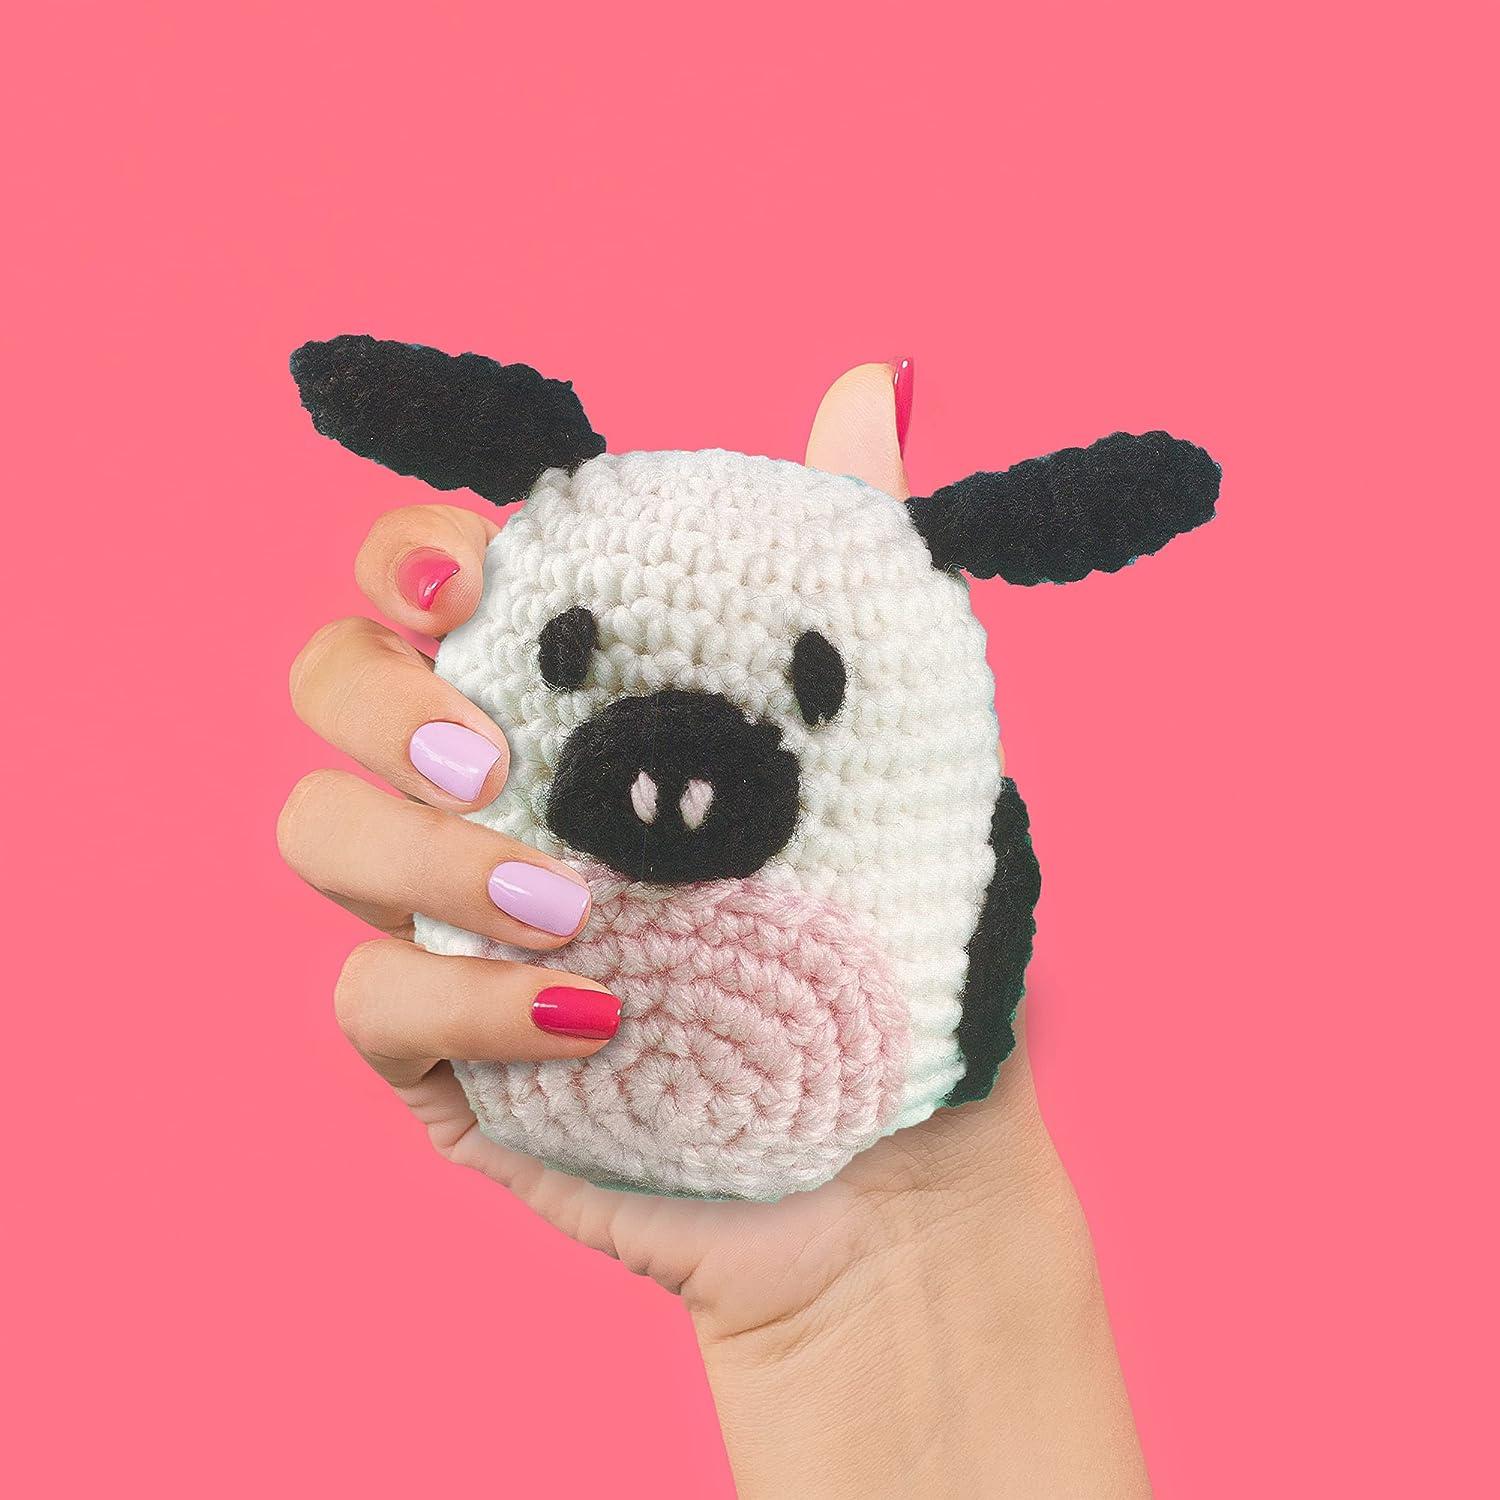 Leisure Arts Crochet Pudgies Bunny Kit